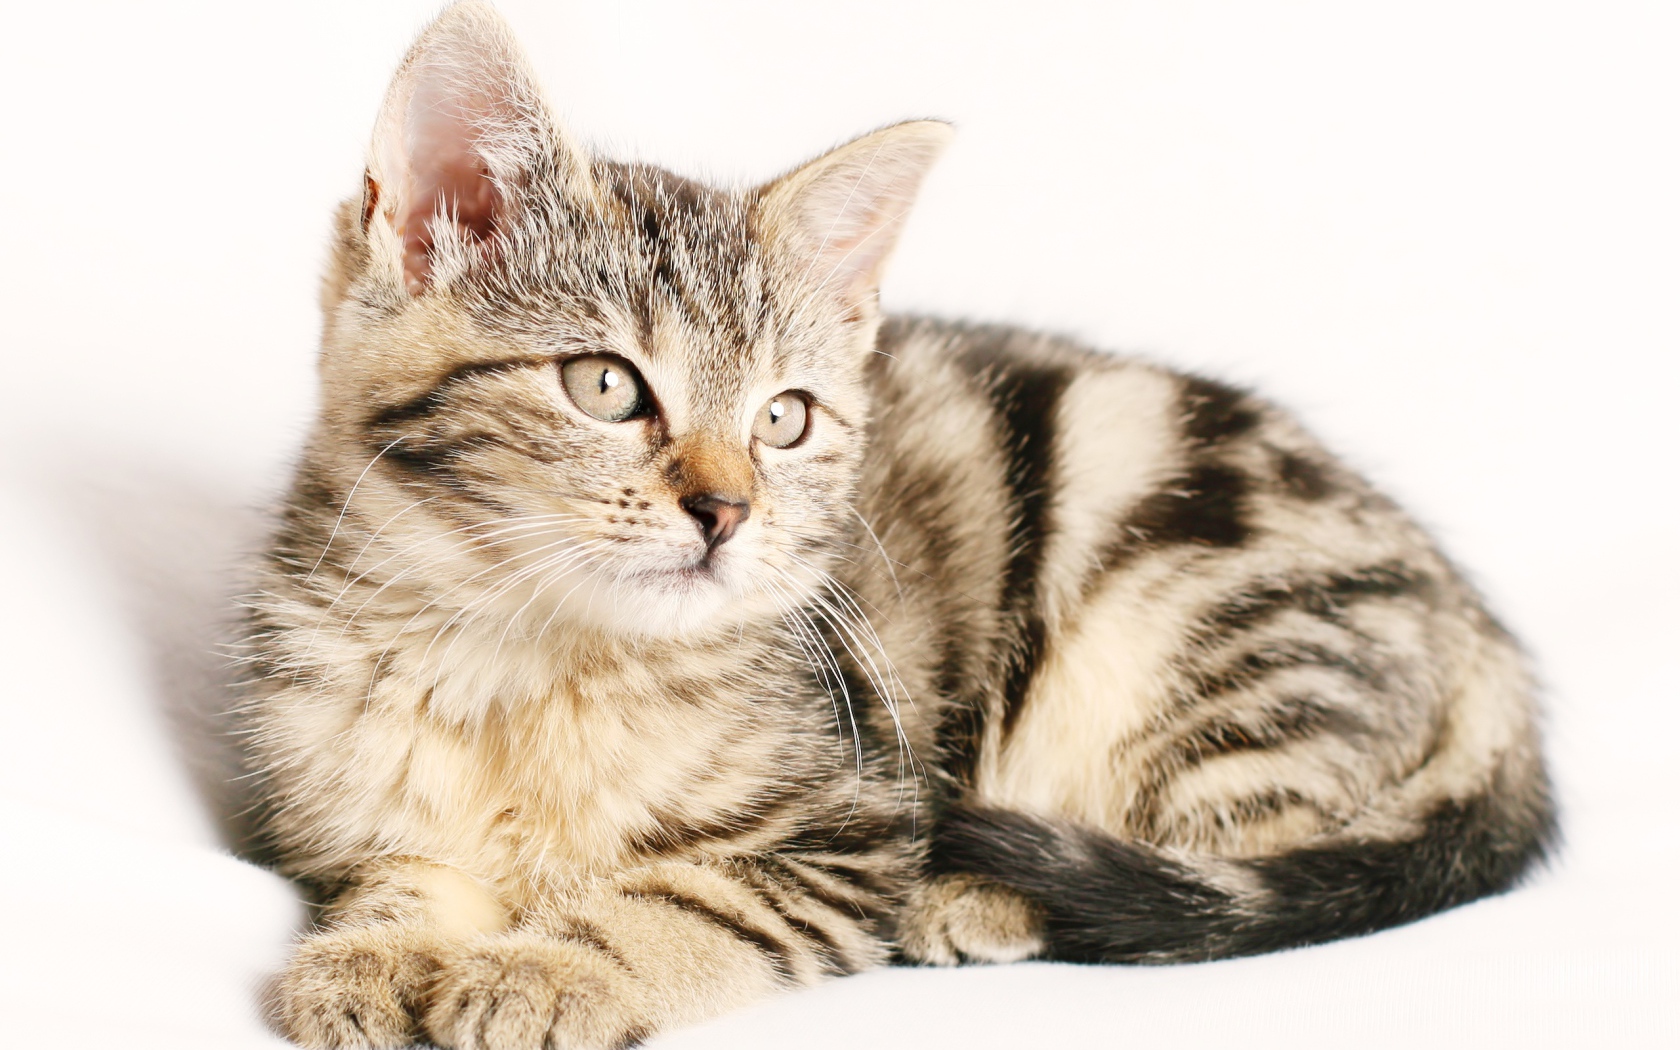 Striped purebred kitten on a white background